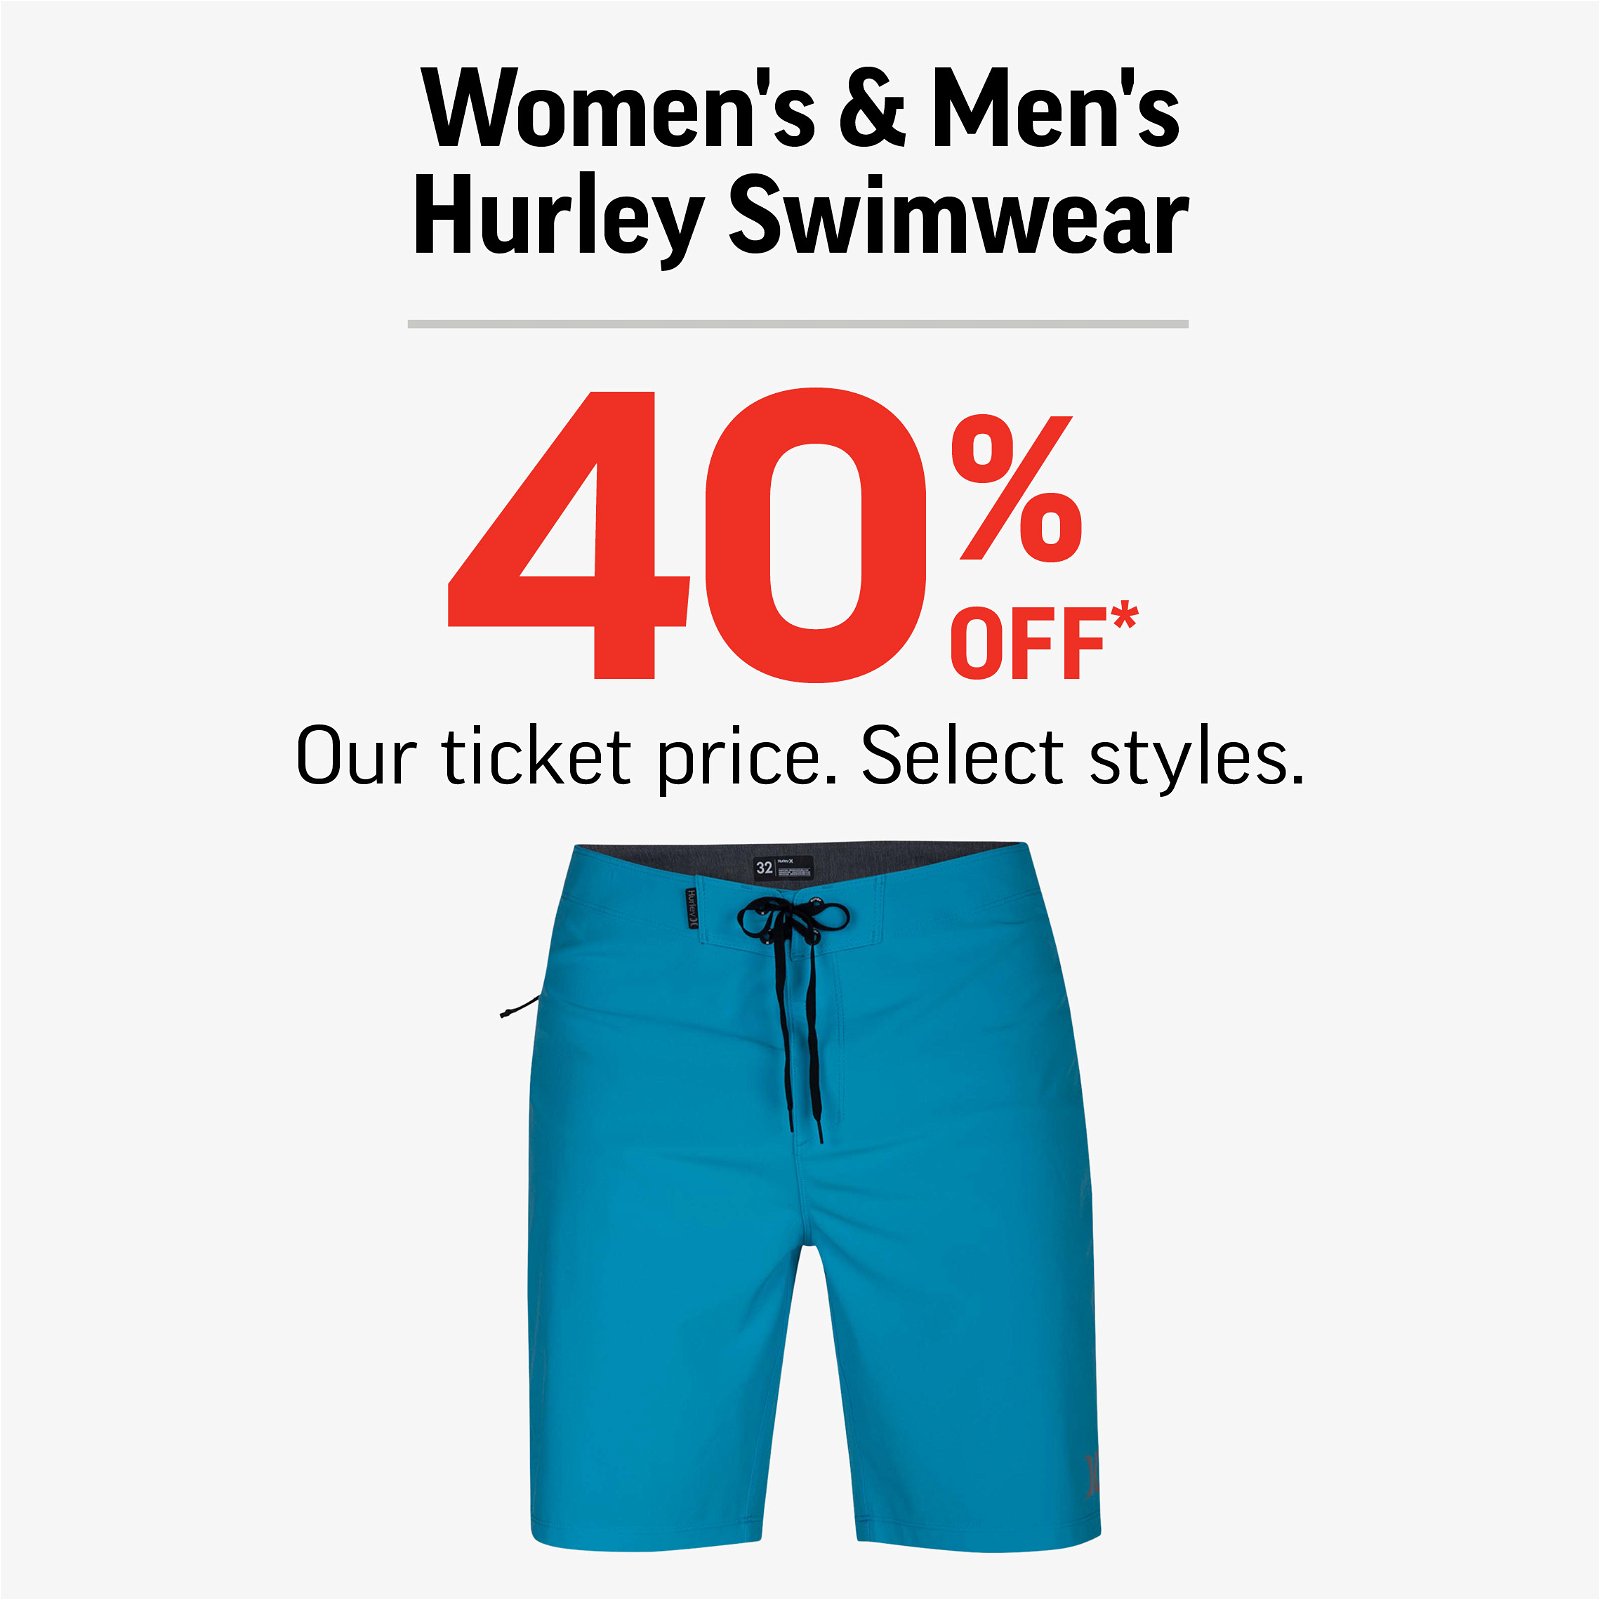 WOMENS & MEN'S HURLEY SWIMWEAR 40% OFF